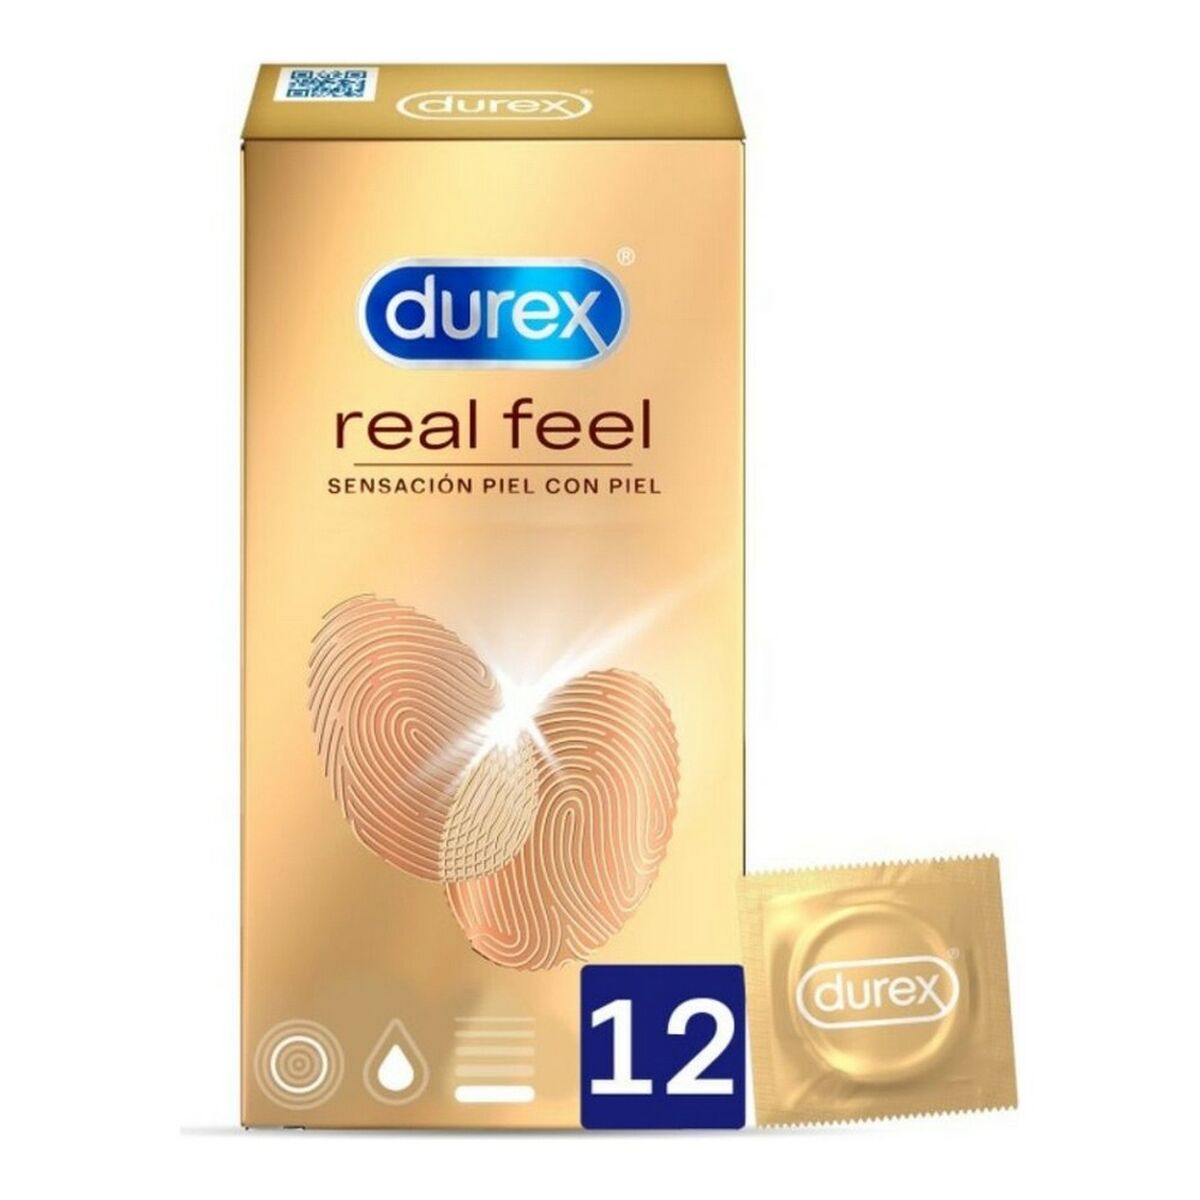 Feeling цена. Презервативы дюрекс Реал. Презервативы дюрекс Реал Фил. Презервативы Durex real feel 12. Durex real feel презервативы для естественных ощущений.